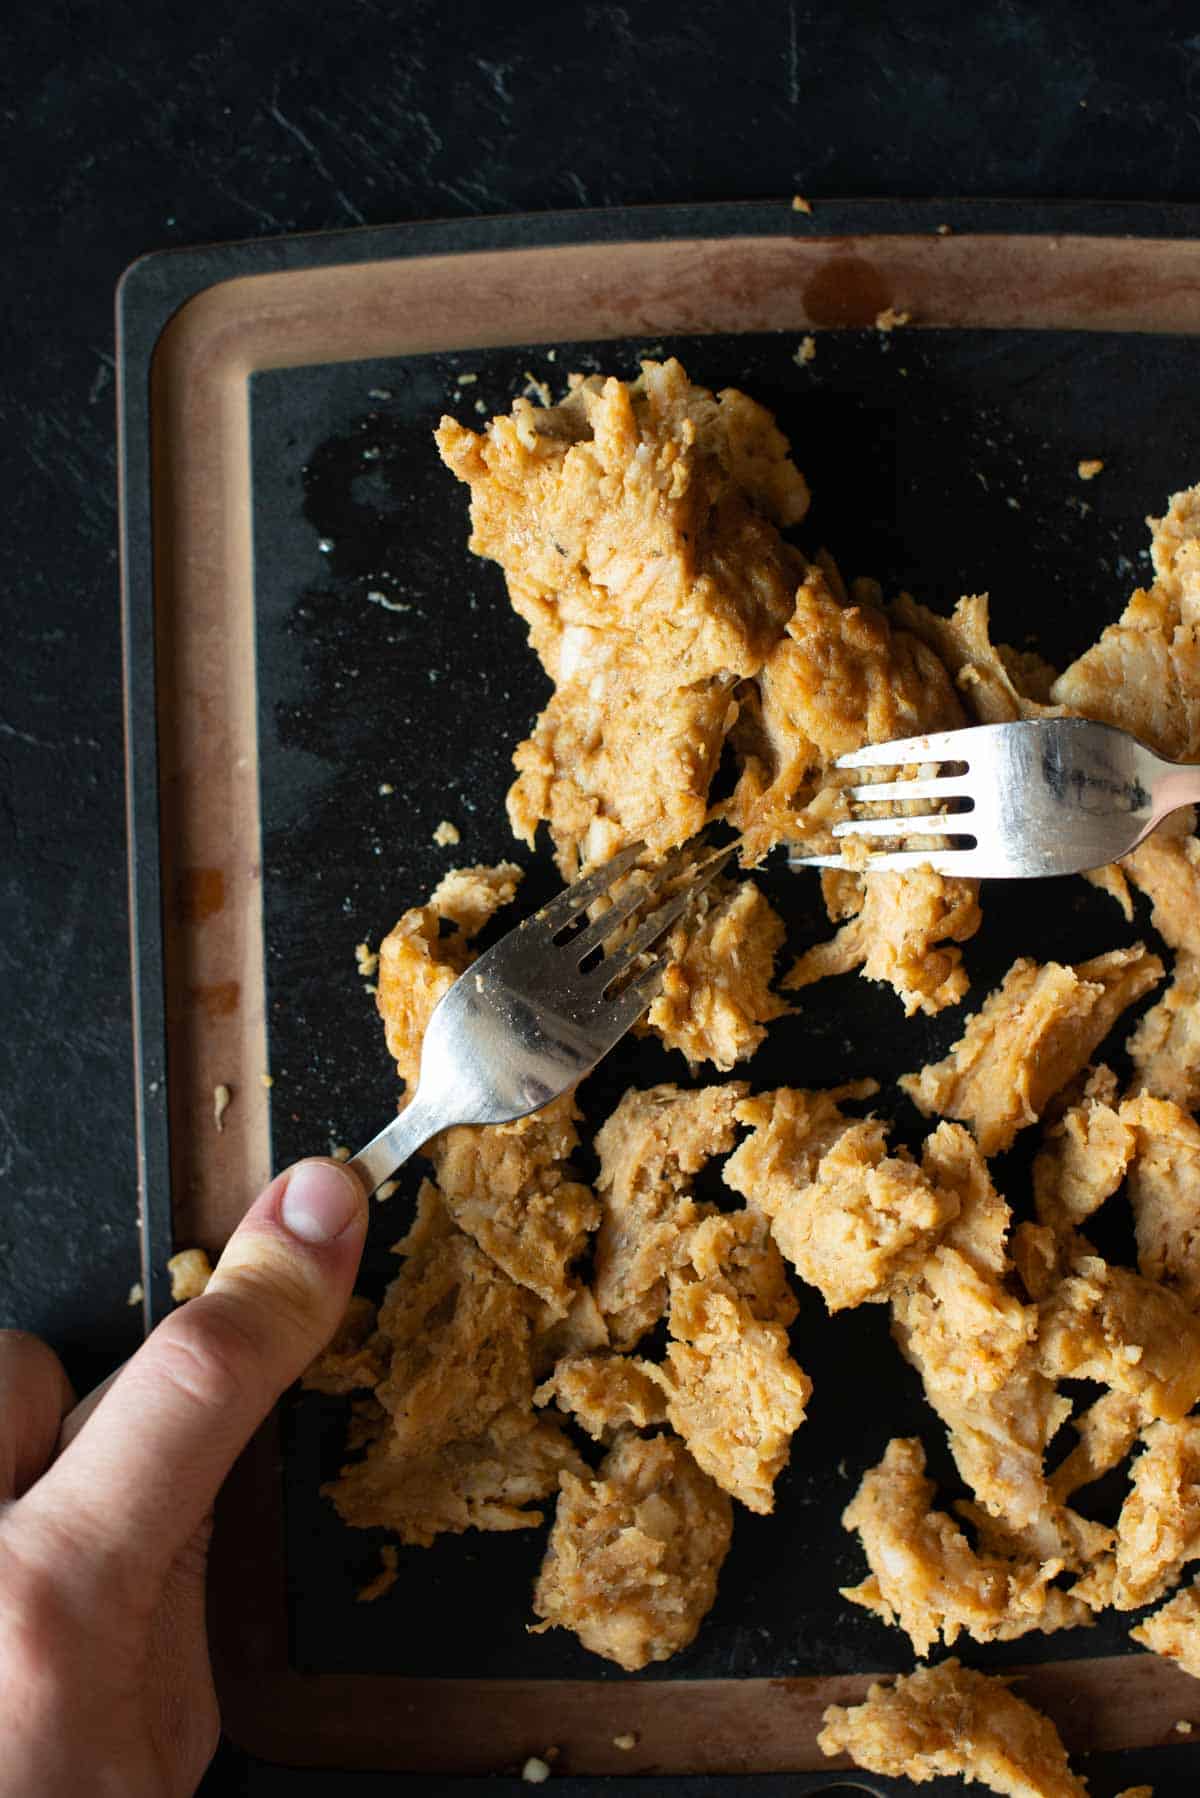 picture showing two forks shredding the vegan shredded chicken